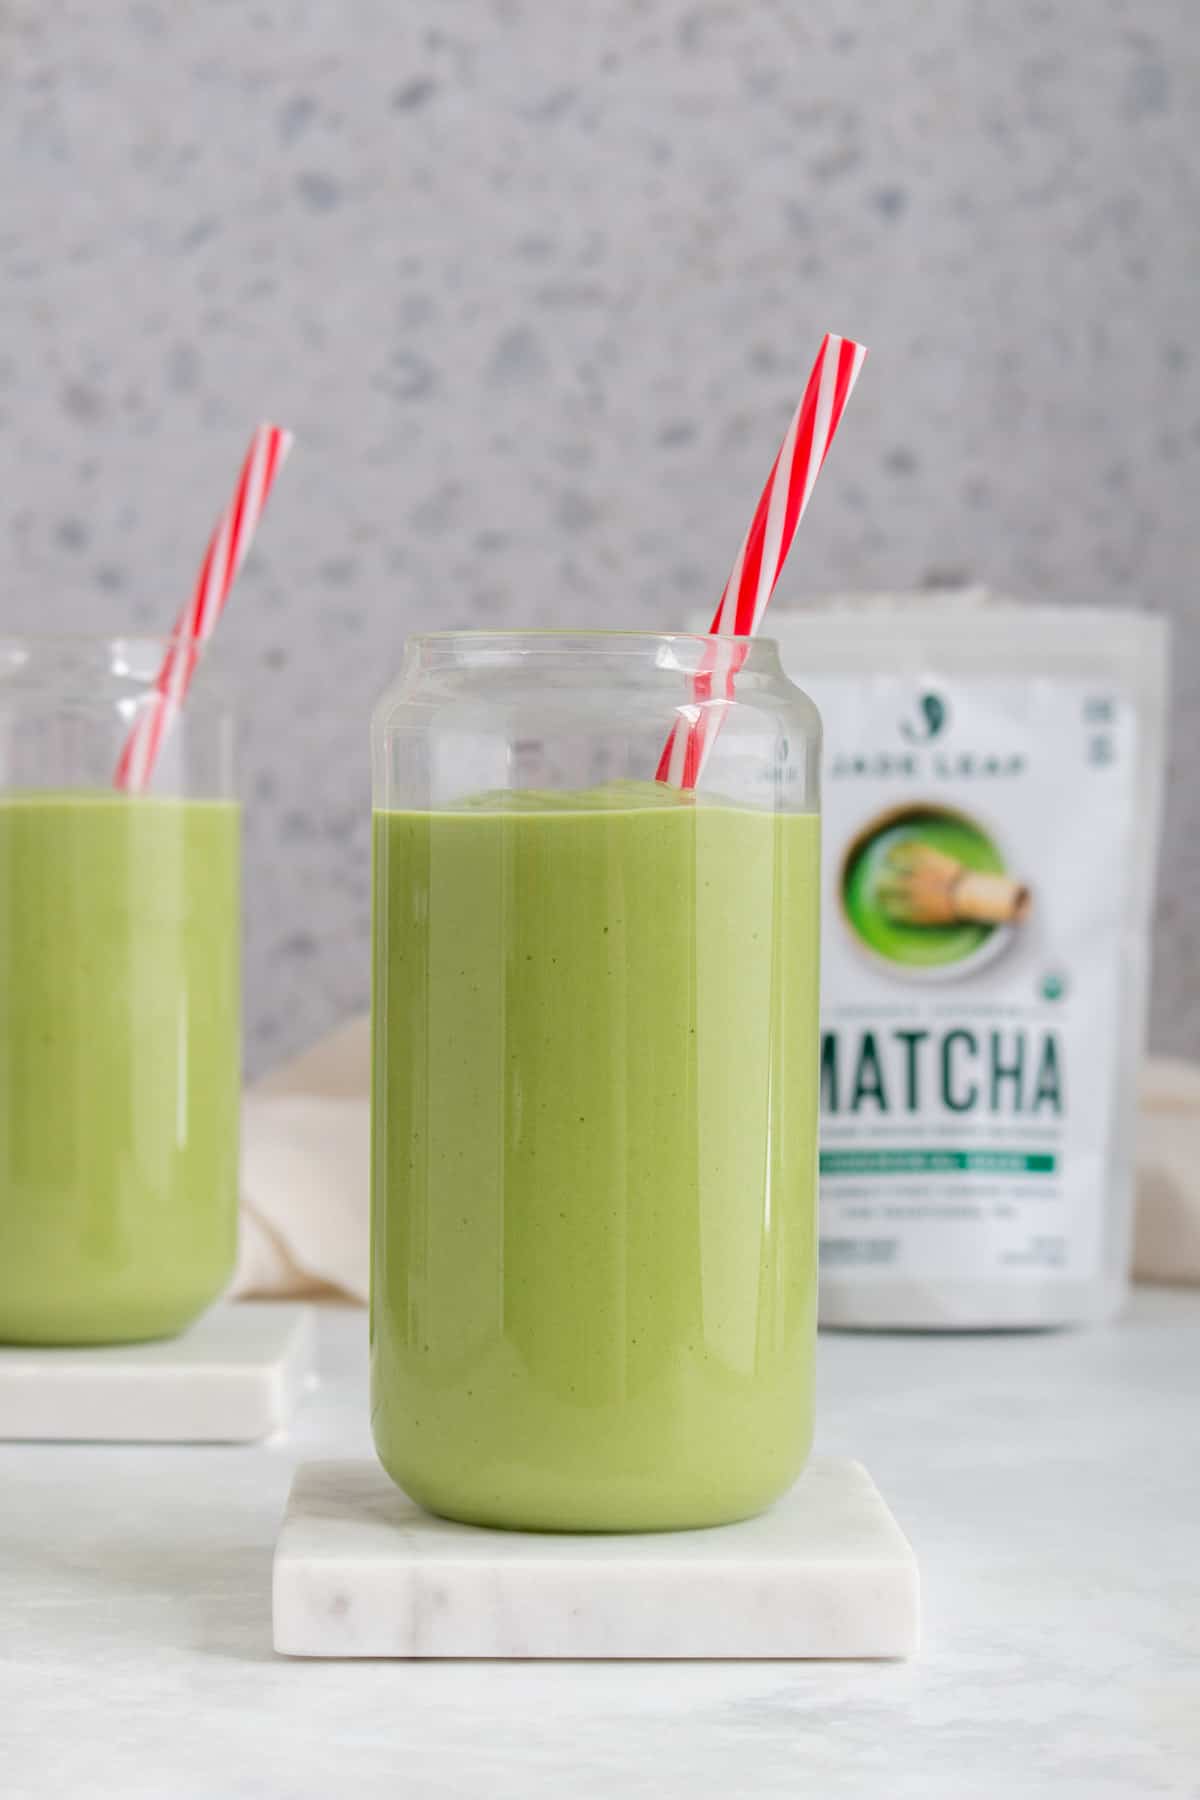 Two glasses of matcha avocado smoothies.